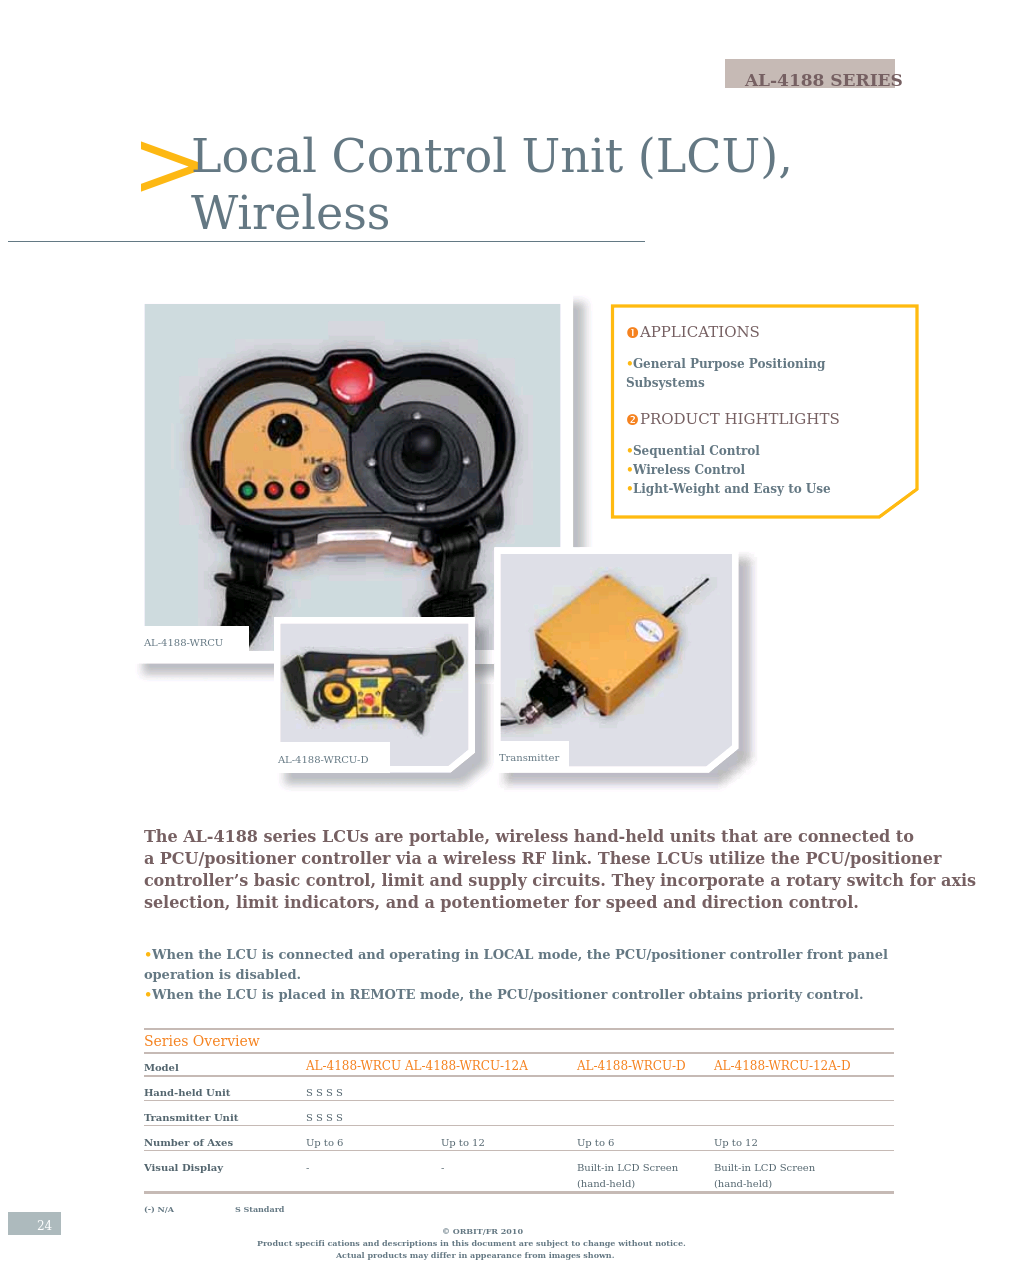 Local Control Units (LCUs), Wireless: AL-4188-WRCU-D